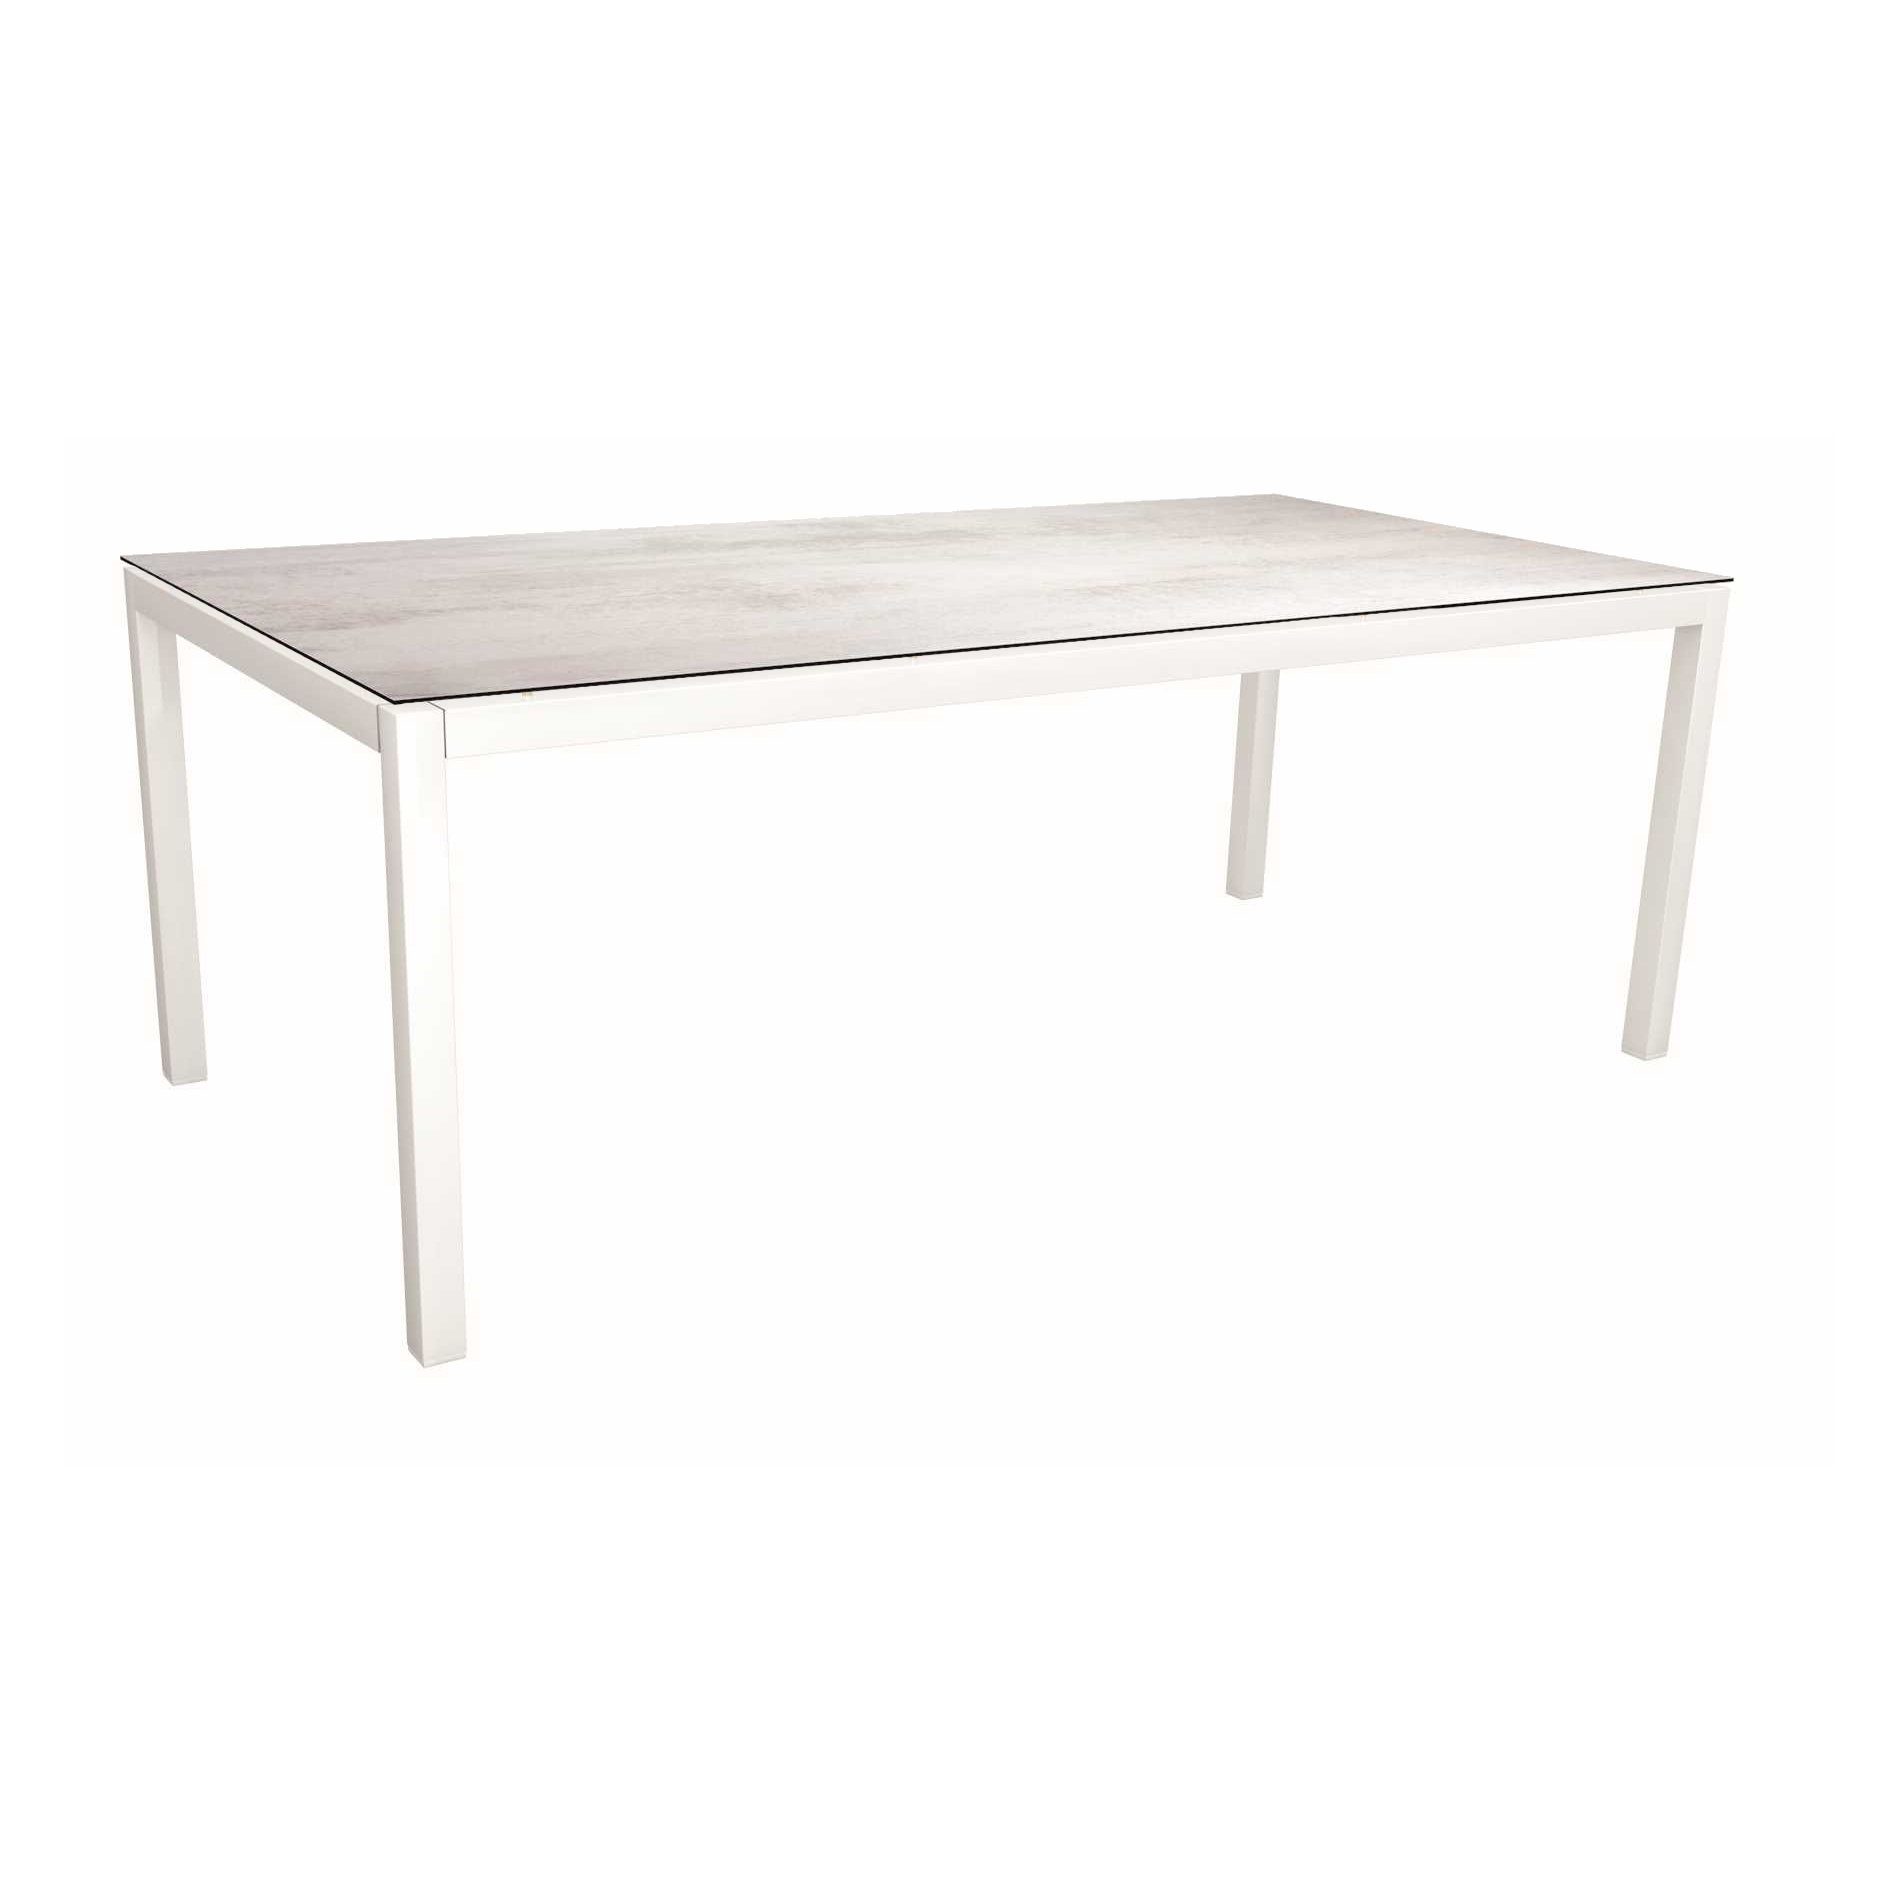 Stern Tischsystem, Gestell Aluminium weiß, Tischplatte HPL Zement hell, Größe: 200x100 cm